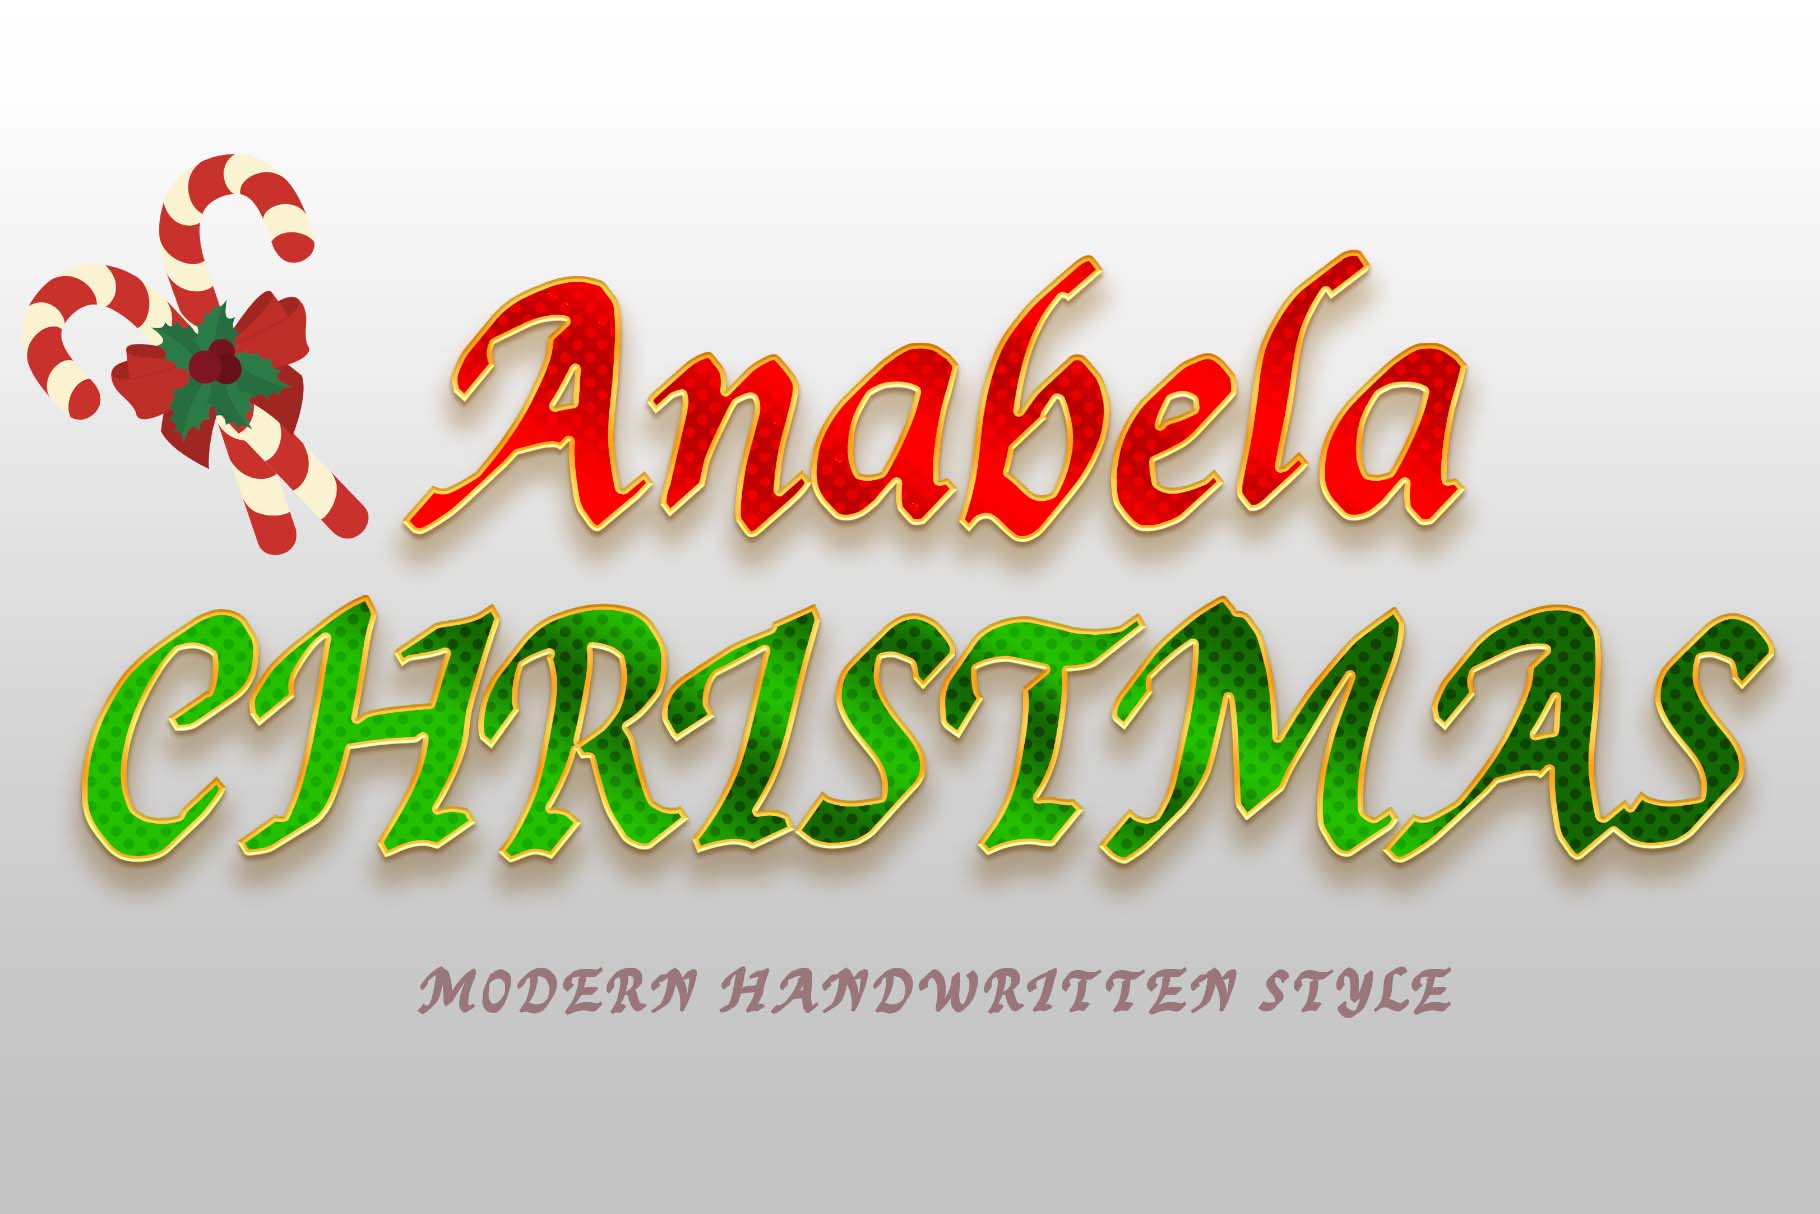 Anabela Christmas OTF Personal